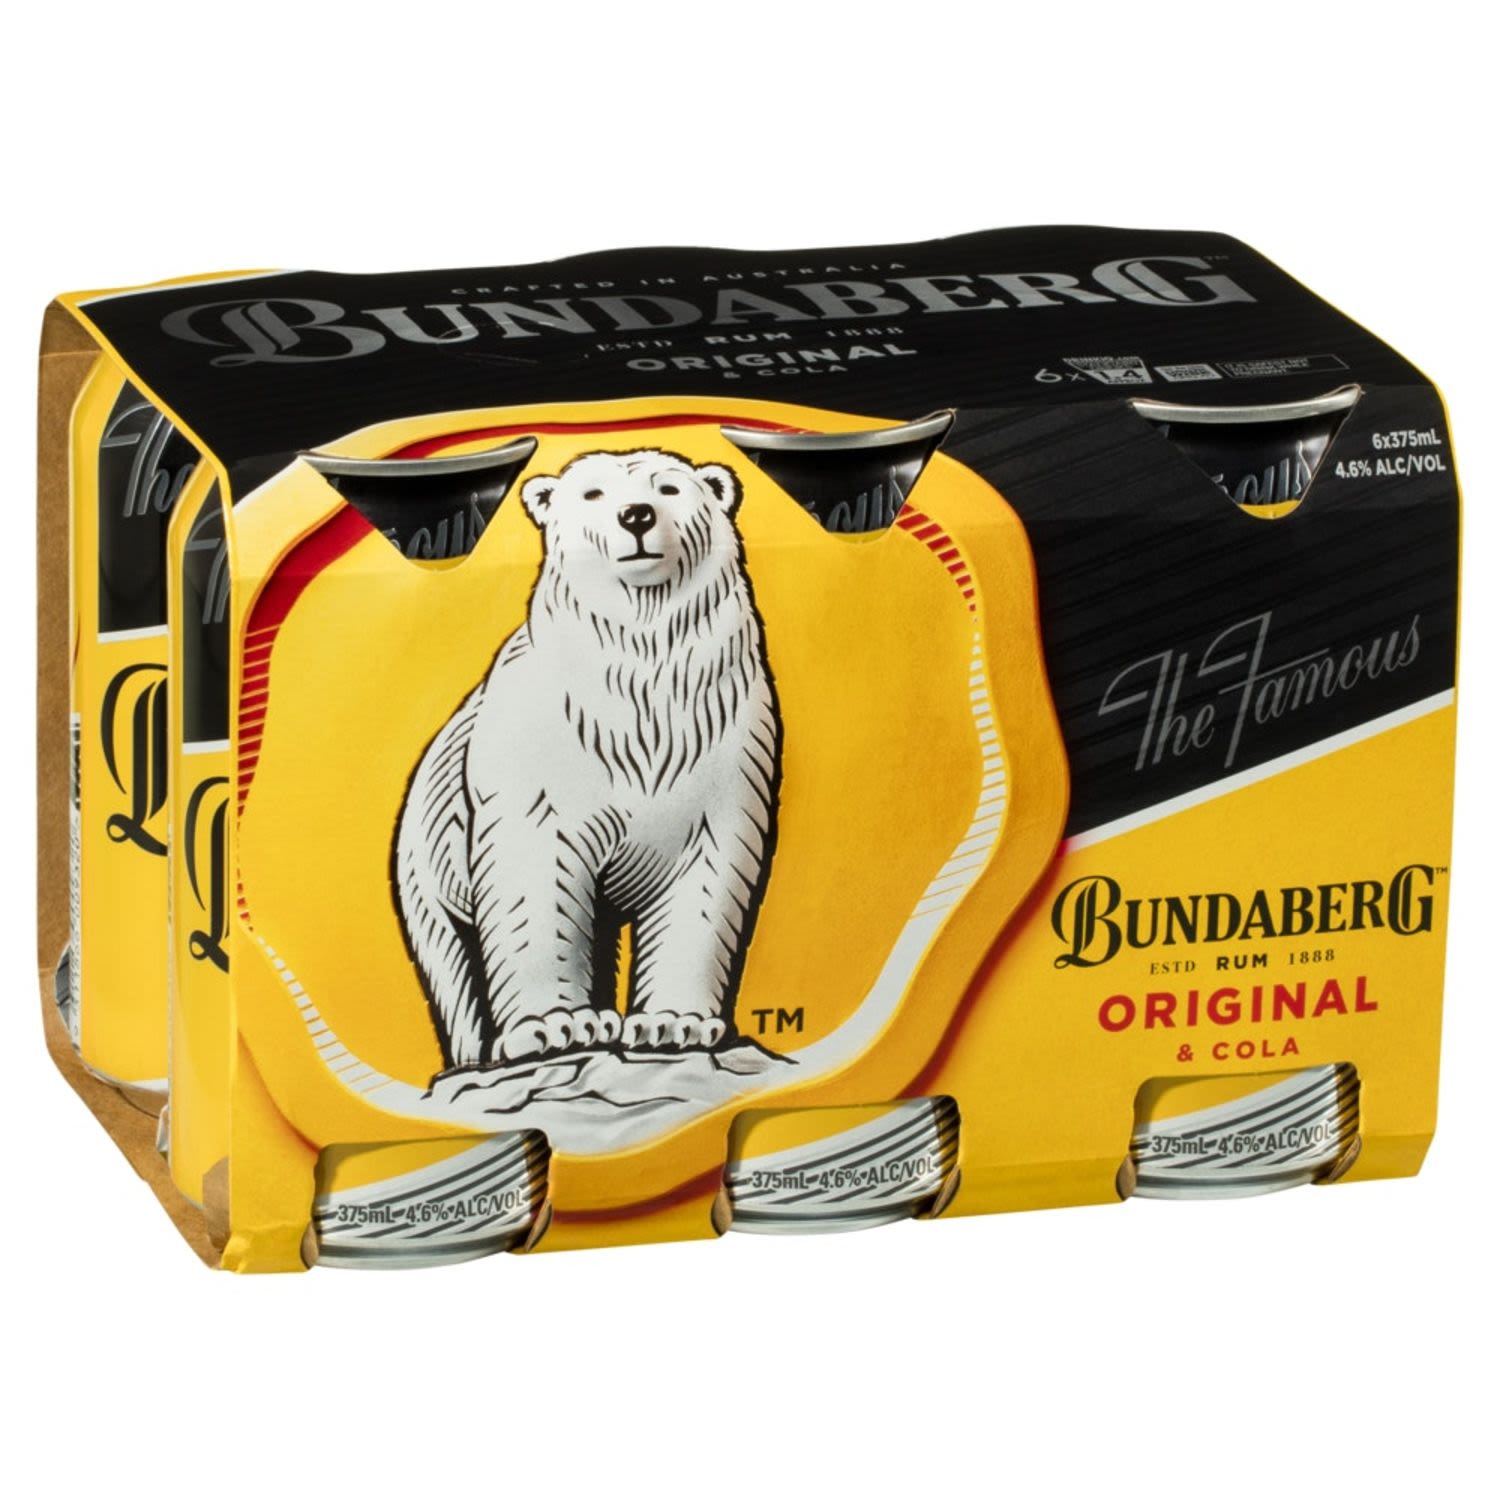 Bundaberg Original Rum & Cola Can 375mL 6 Pack